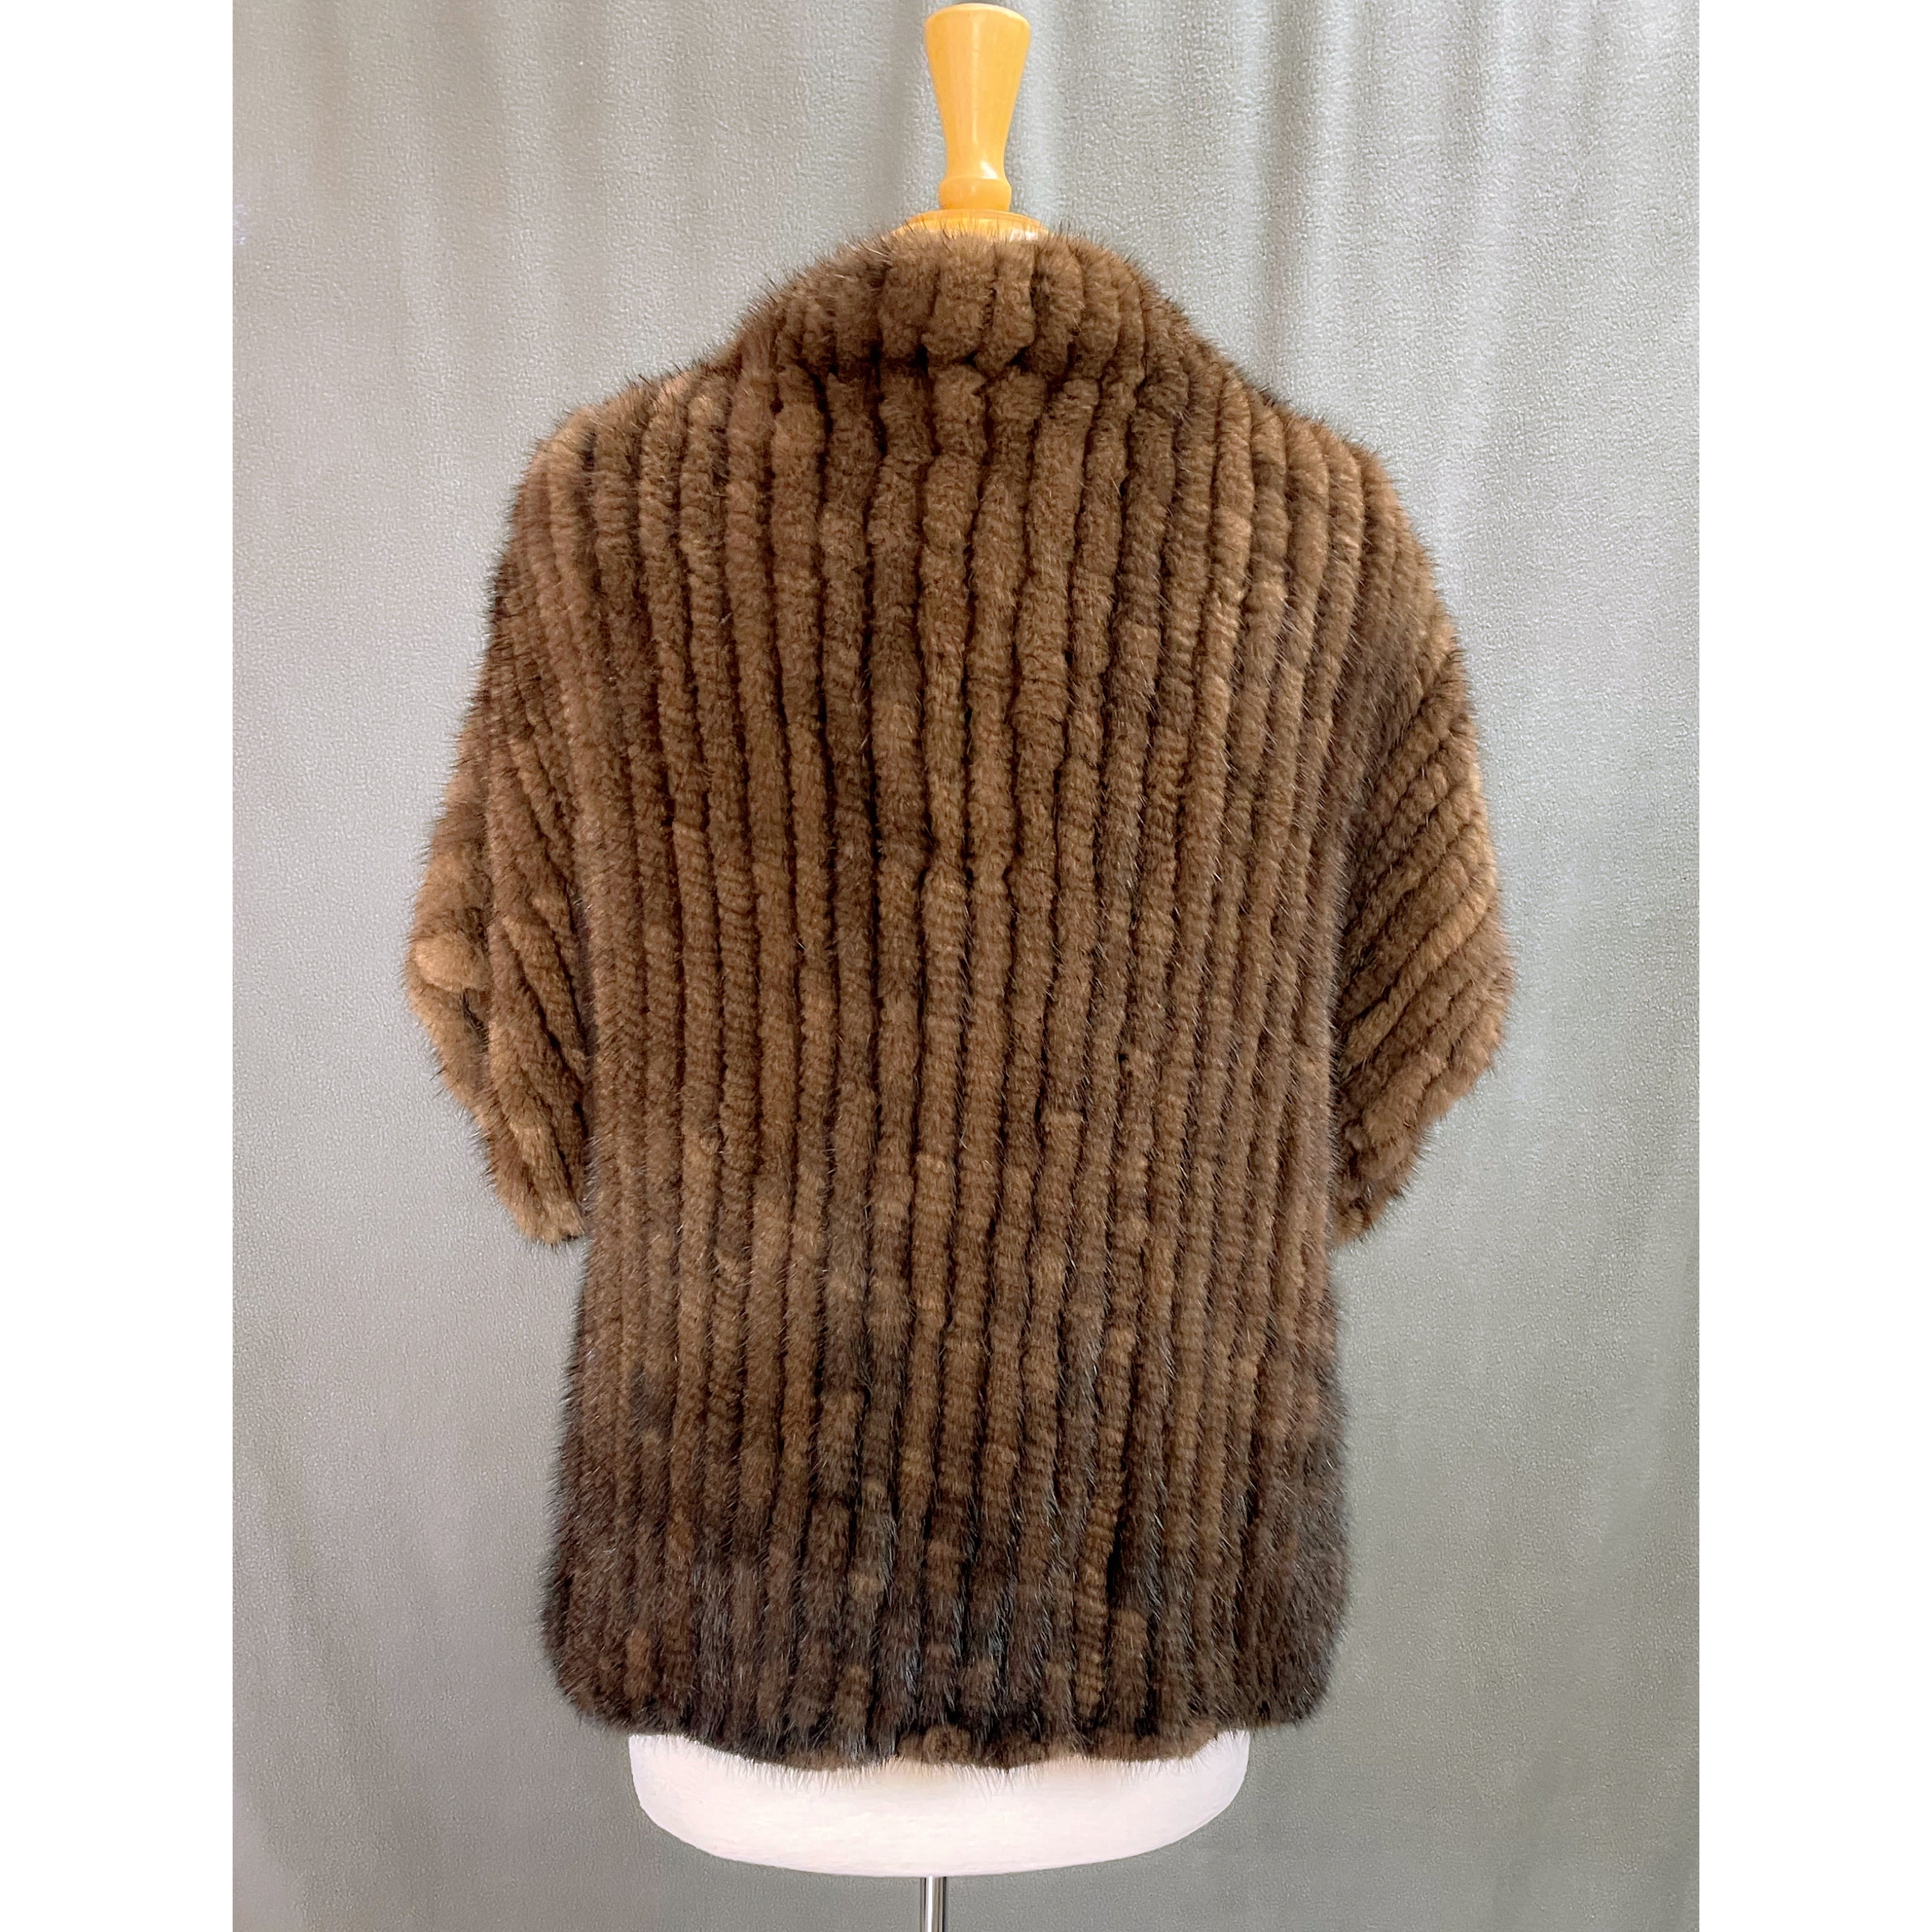 Adrienne Landau woven mink vest, one size fits most